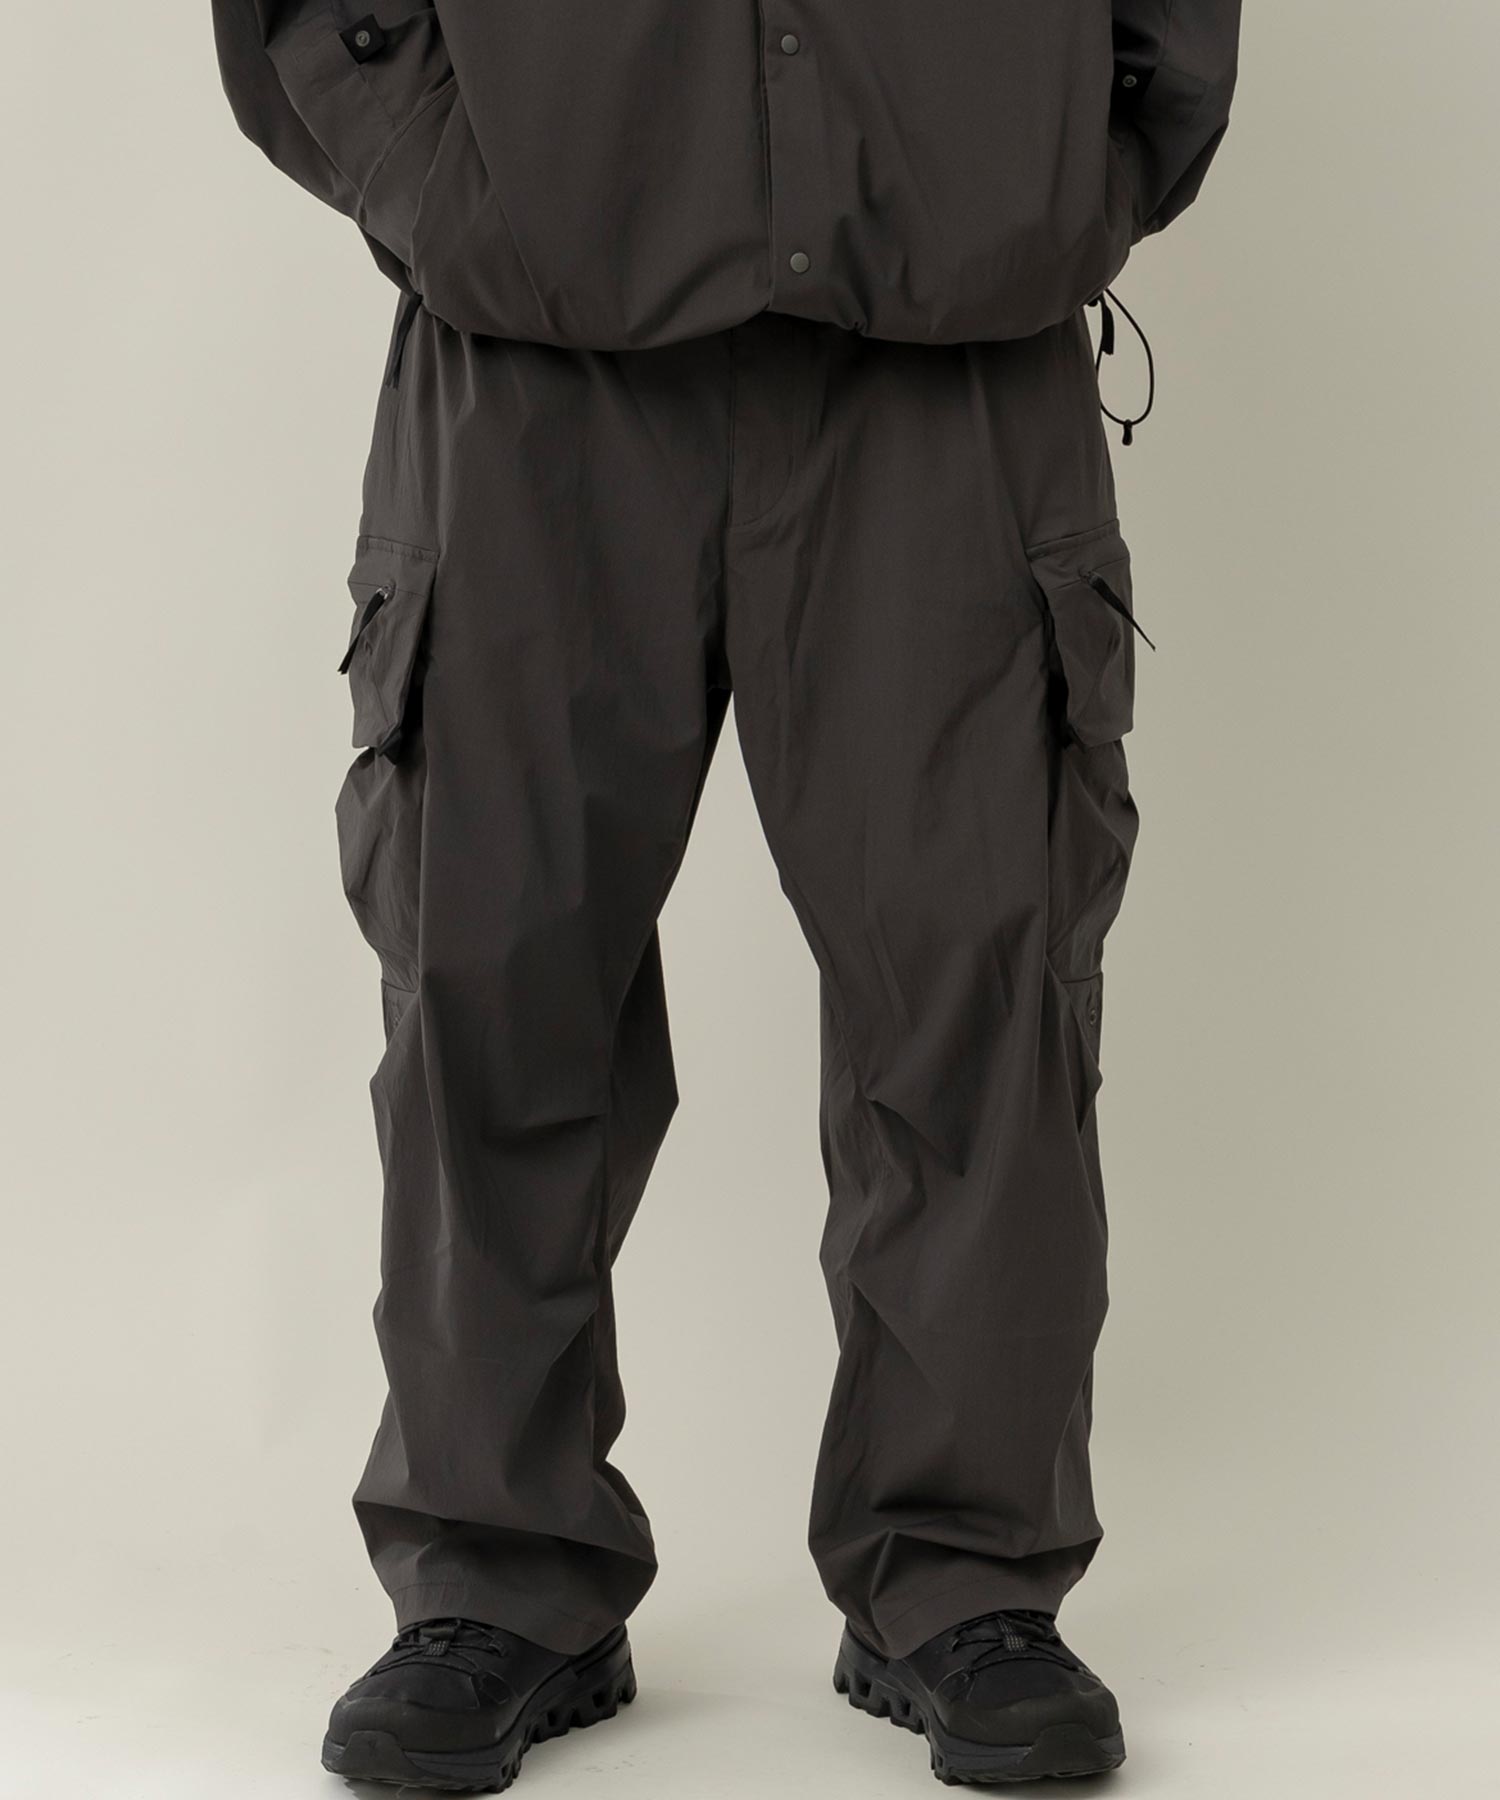 【MENS】Cargo Pants KAR カーゴパンツ 大容量ポケット ロングパンツ メンズパンツ 撥水 ザックポケット / karu-stretch taffeta II / アルクフェニックス